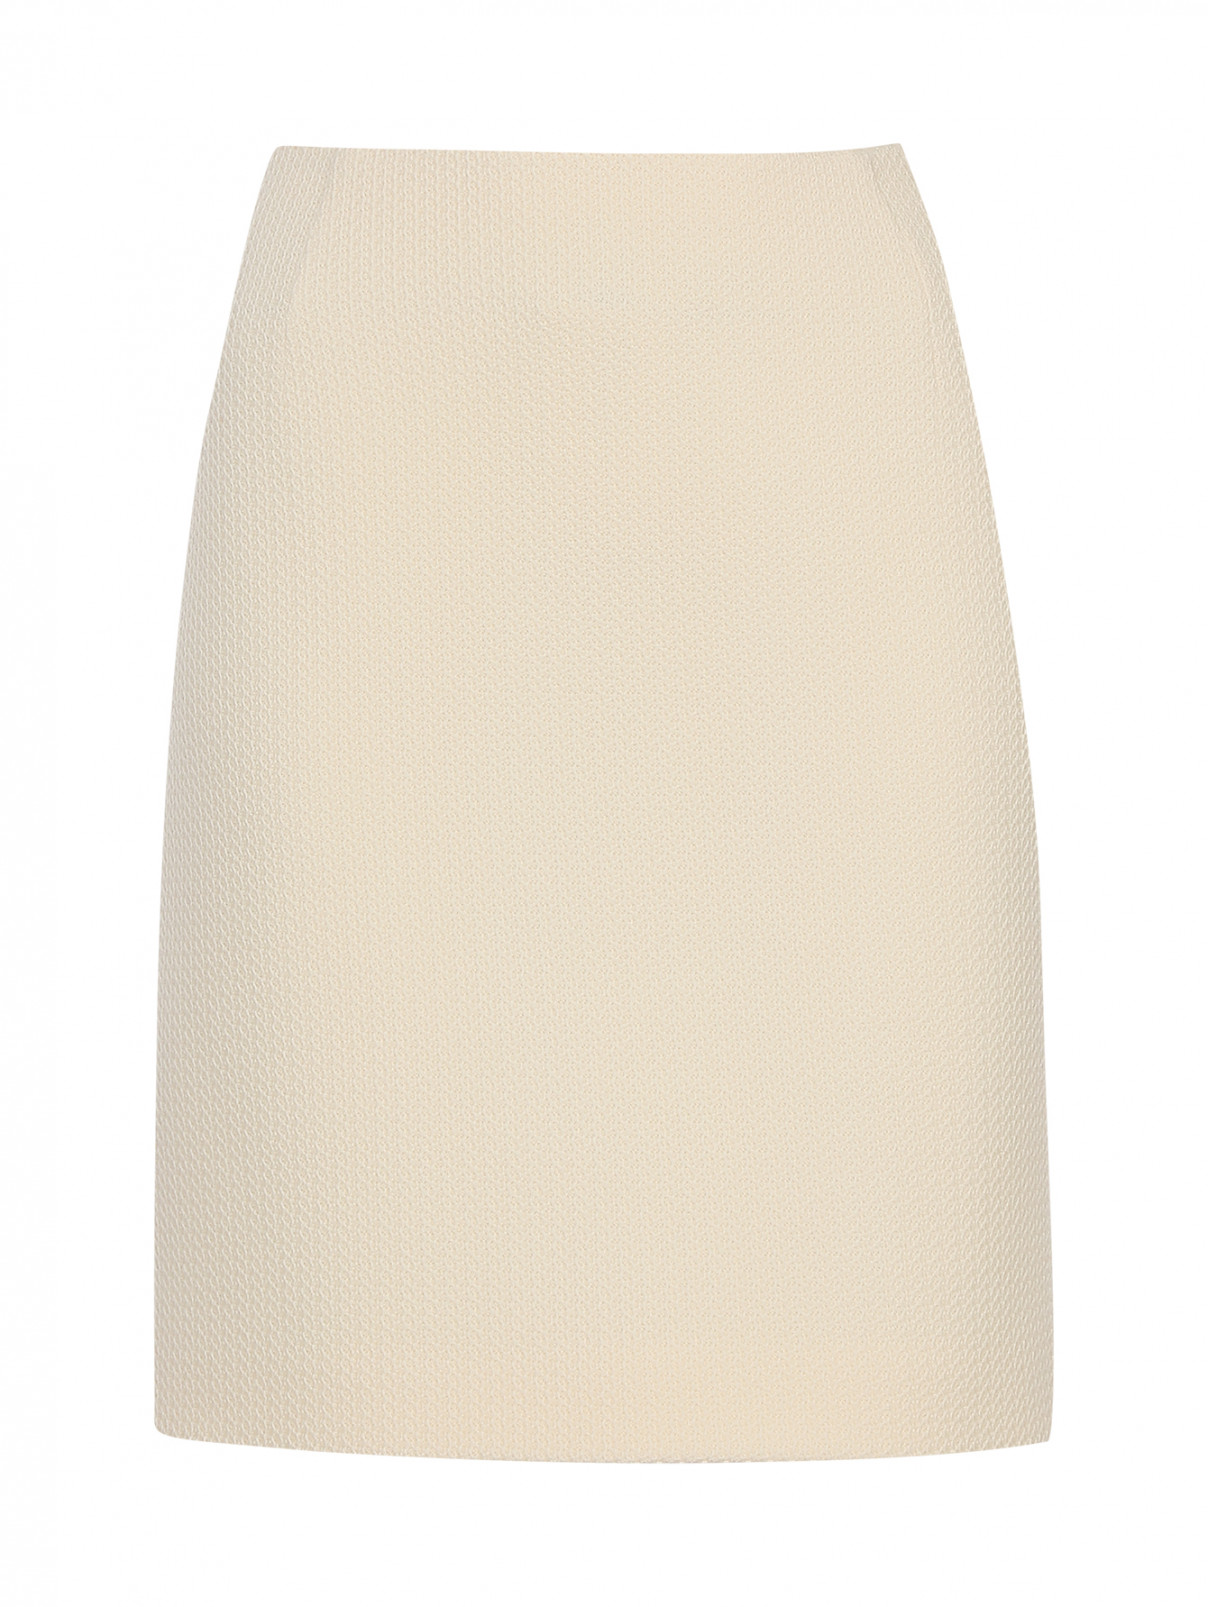 Шерстяная юбка-мини Moschino Couture  –  Общий вид  – Цвет:  Бежевый